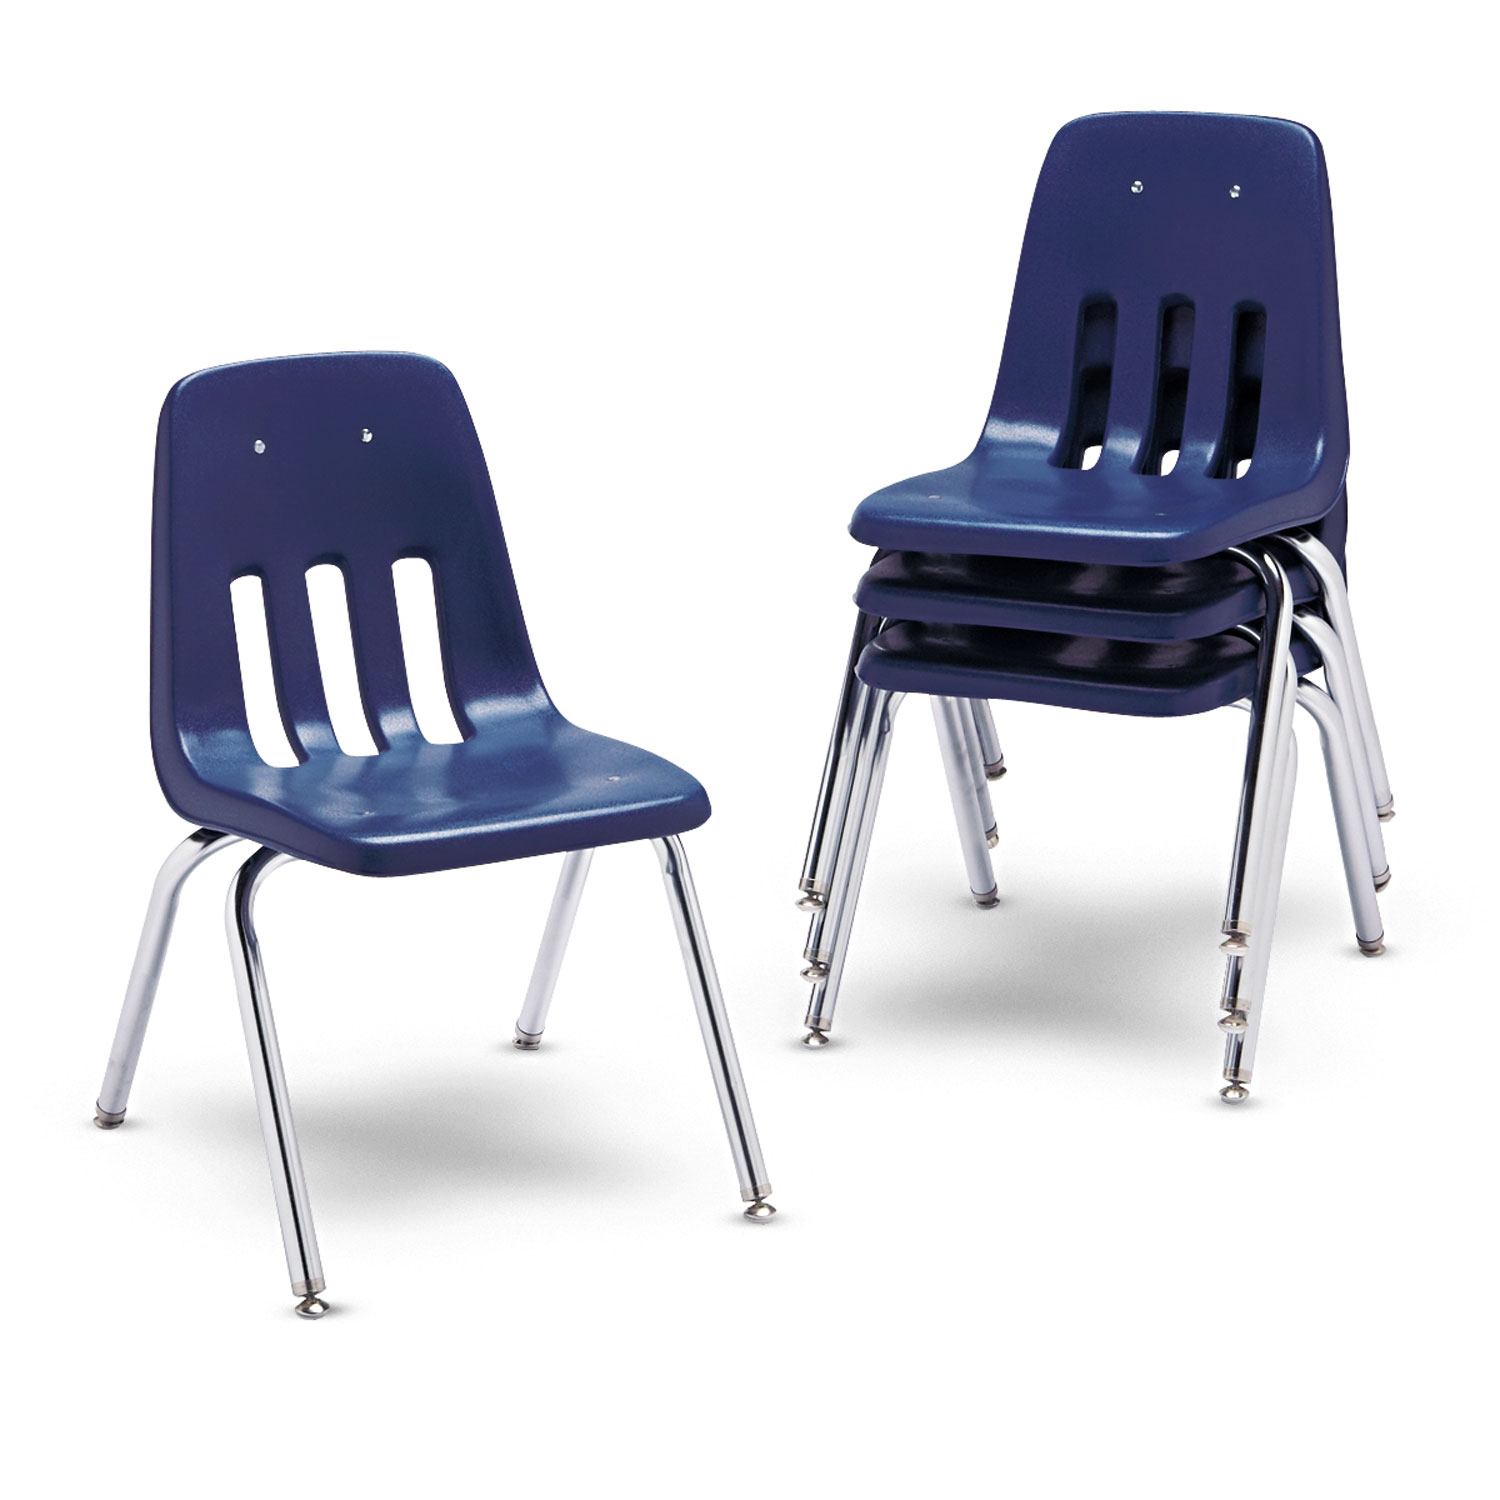 9000 Series Classroom Chairs, 16 Seat Height, Navy/Chrome, 4/Carton